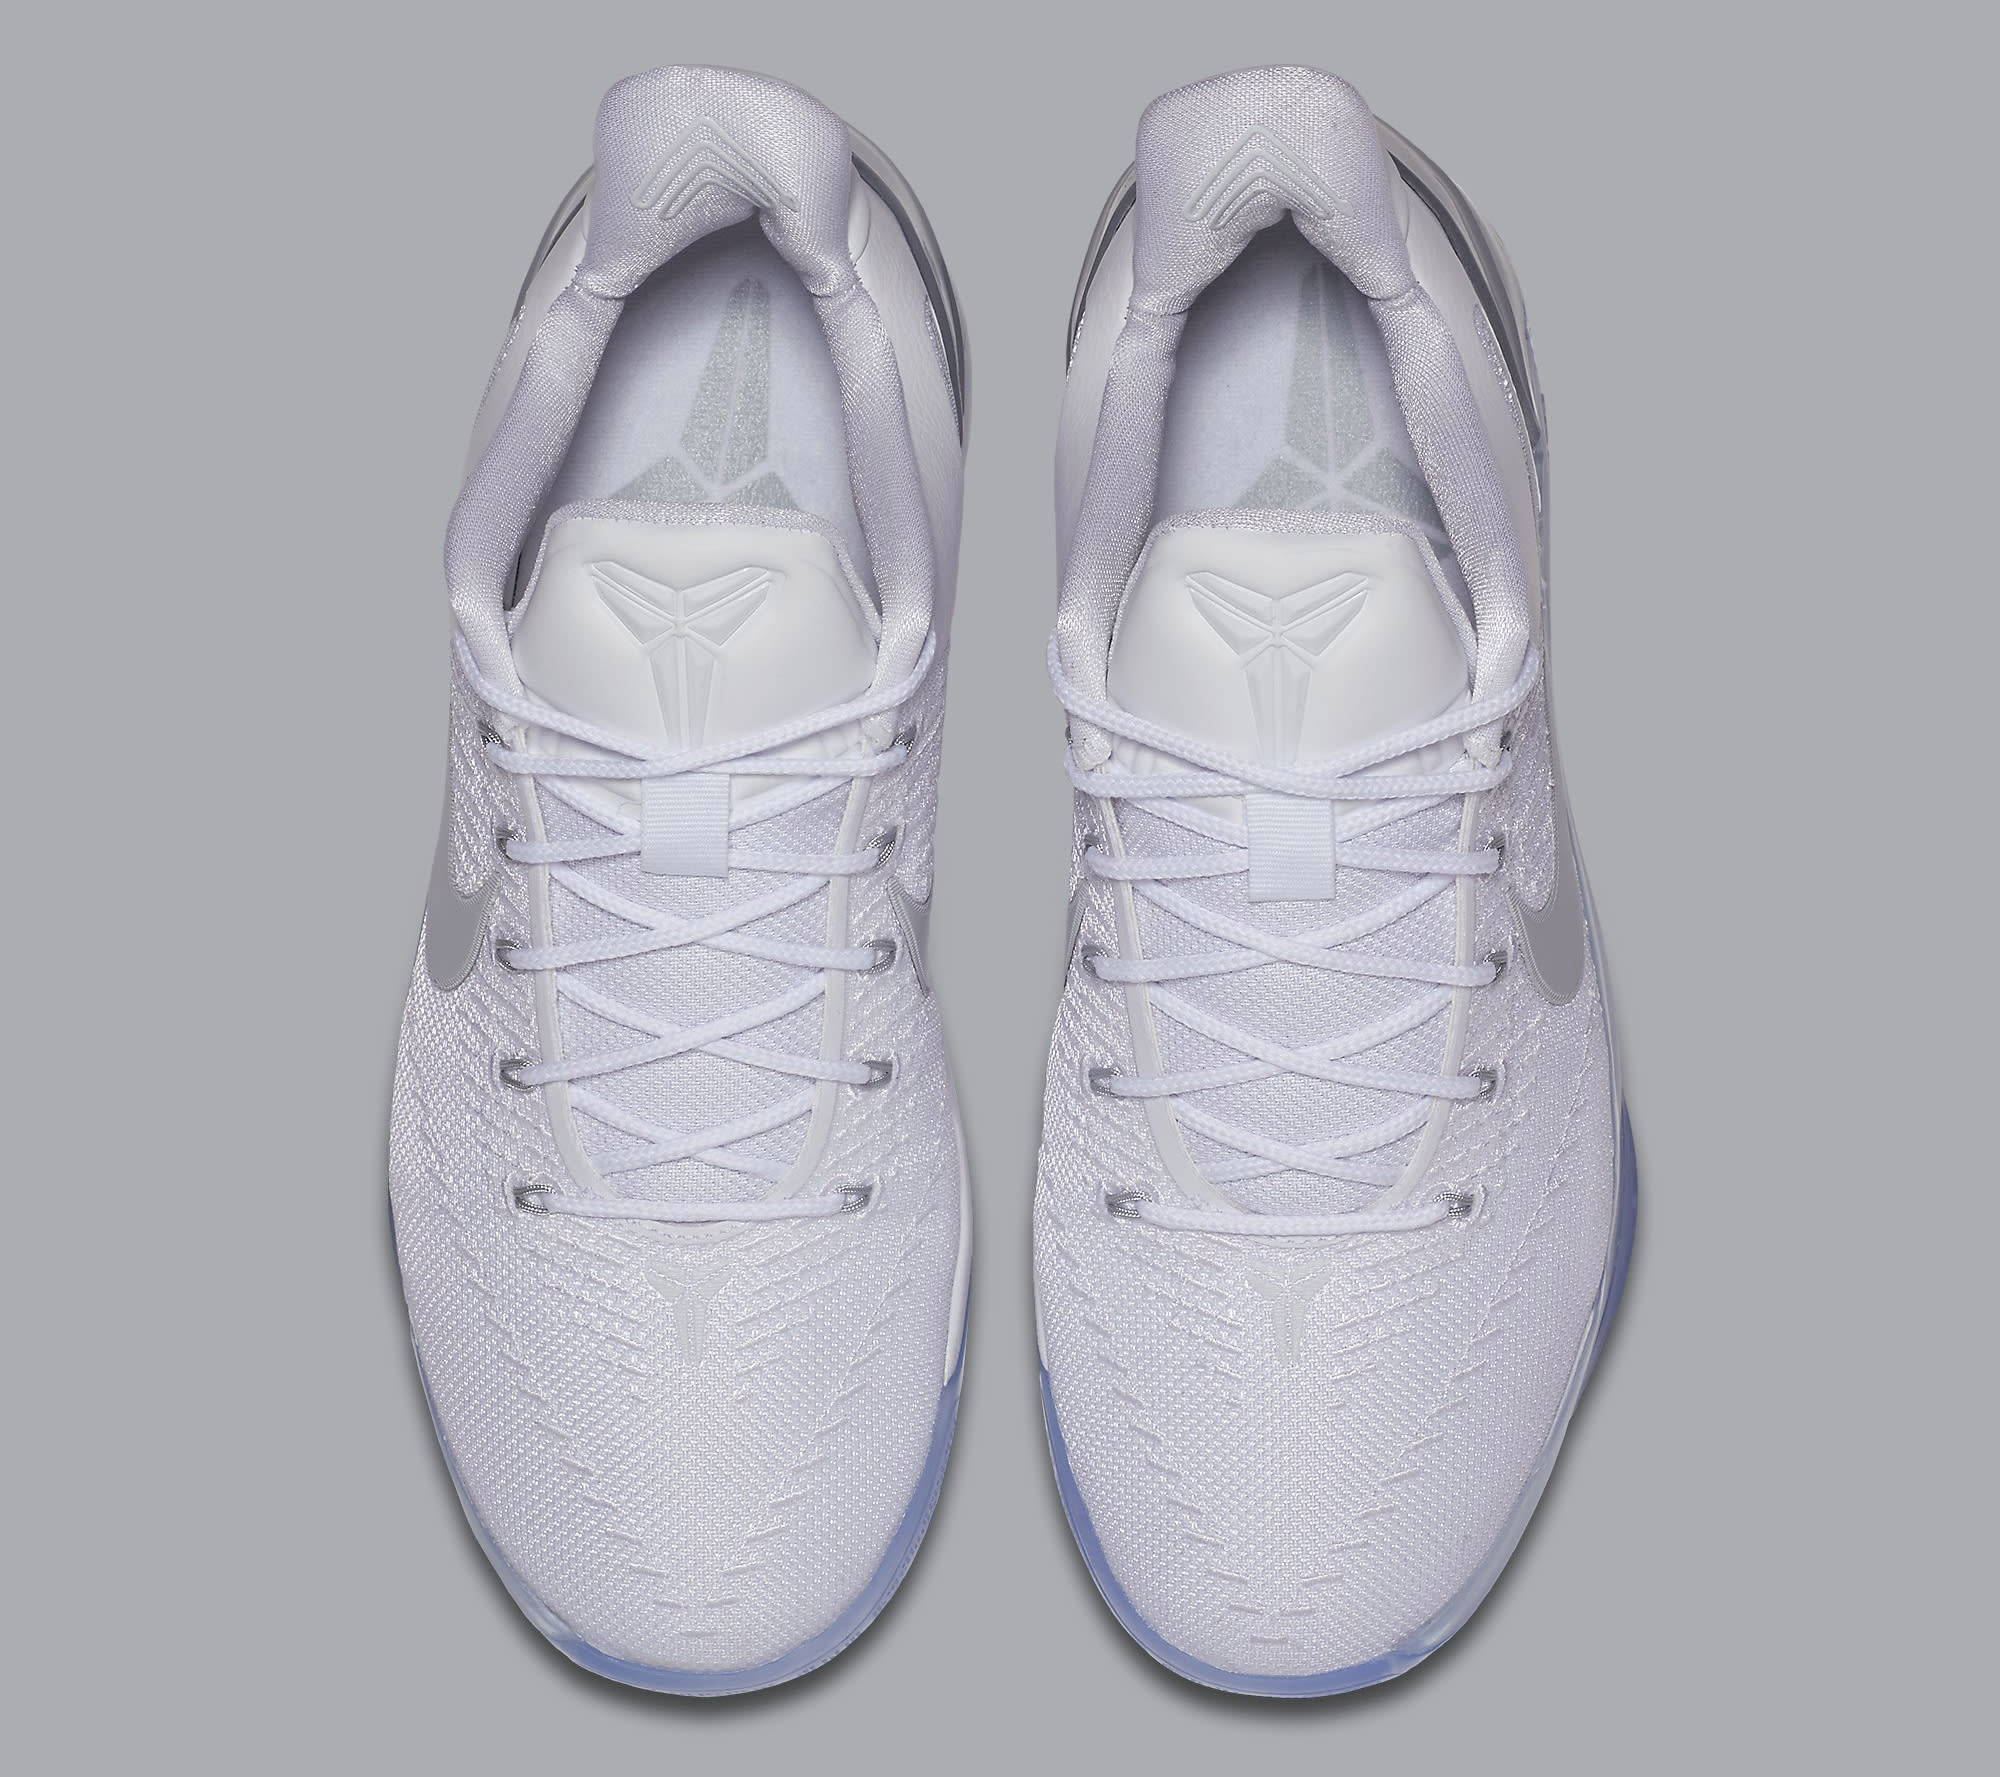 Nike Kobe AD White Silver 852427-110 Top